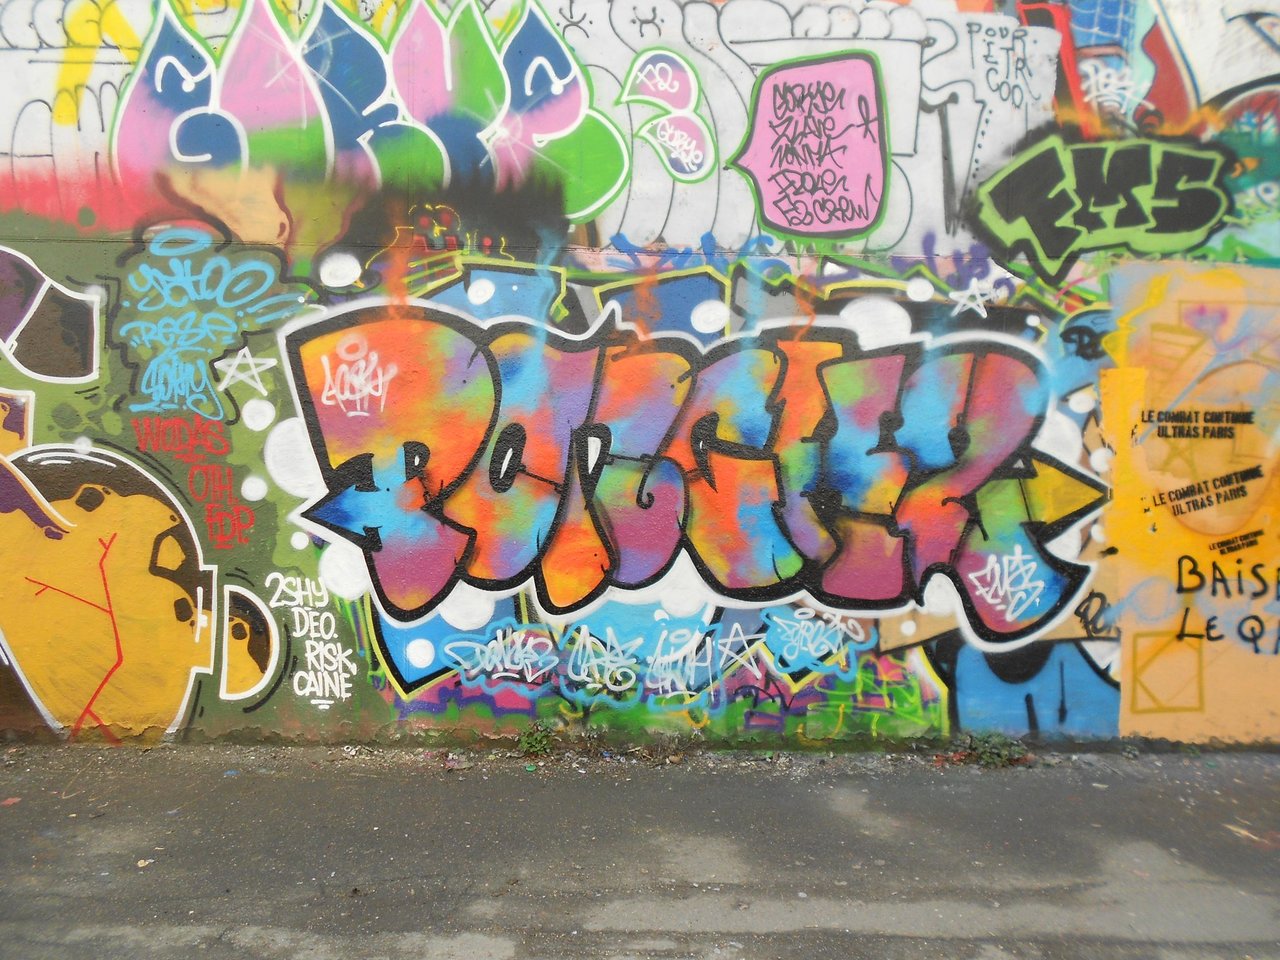 Les Frigos, Paris #streetart #graffiti #paris #urbanart cc @vidos http://t.co/pfmrvJ0cR0